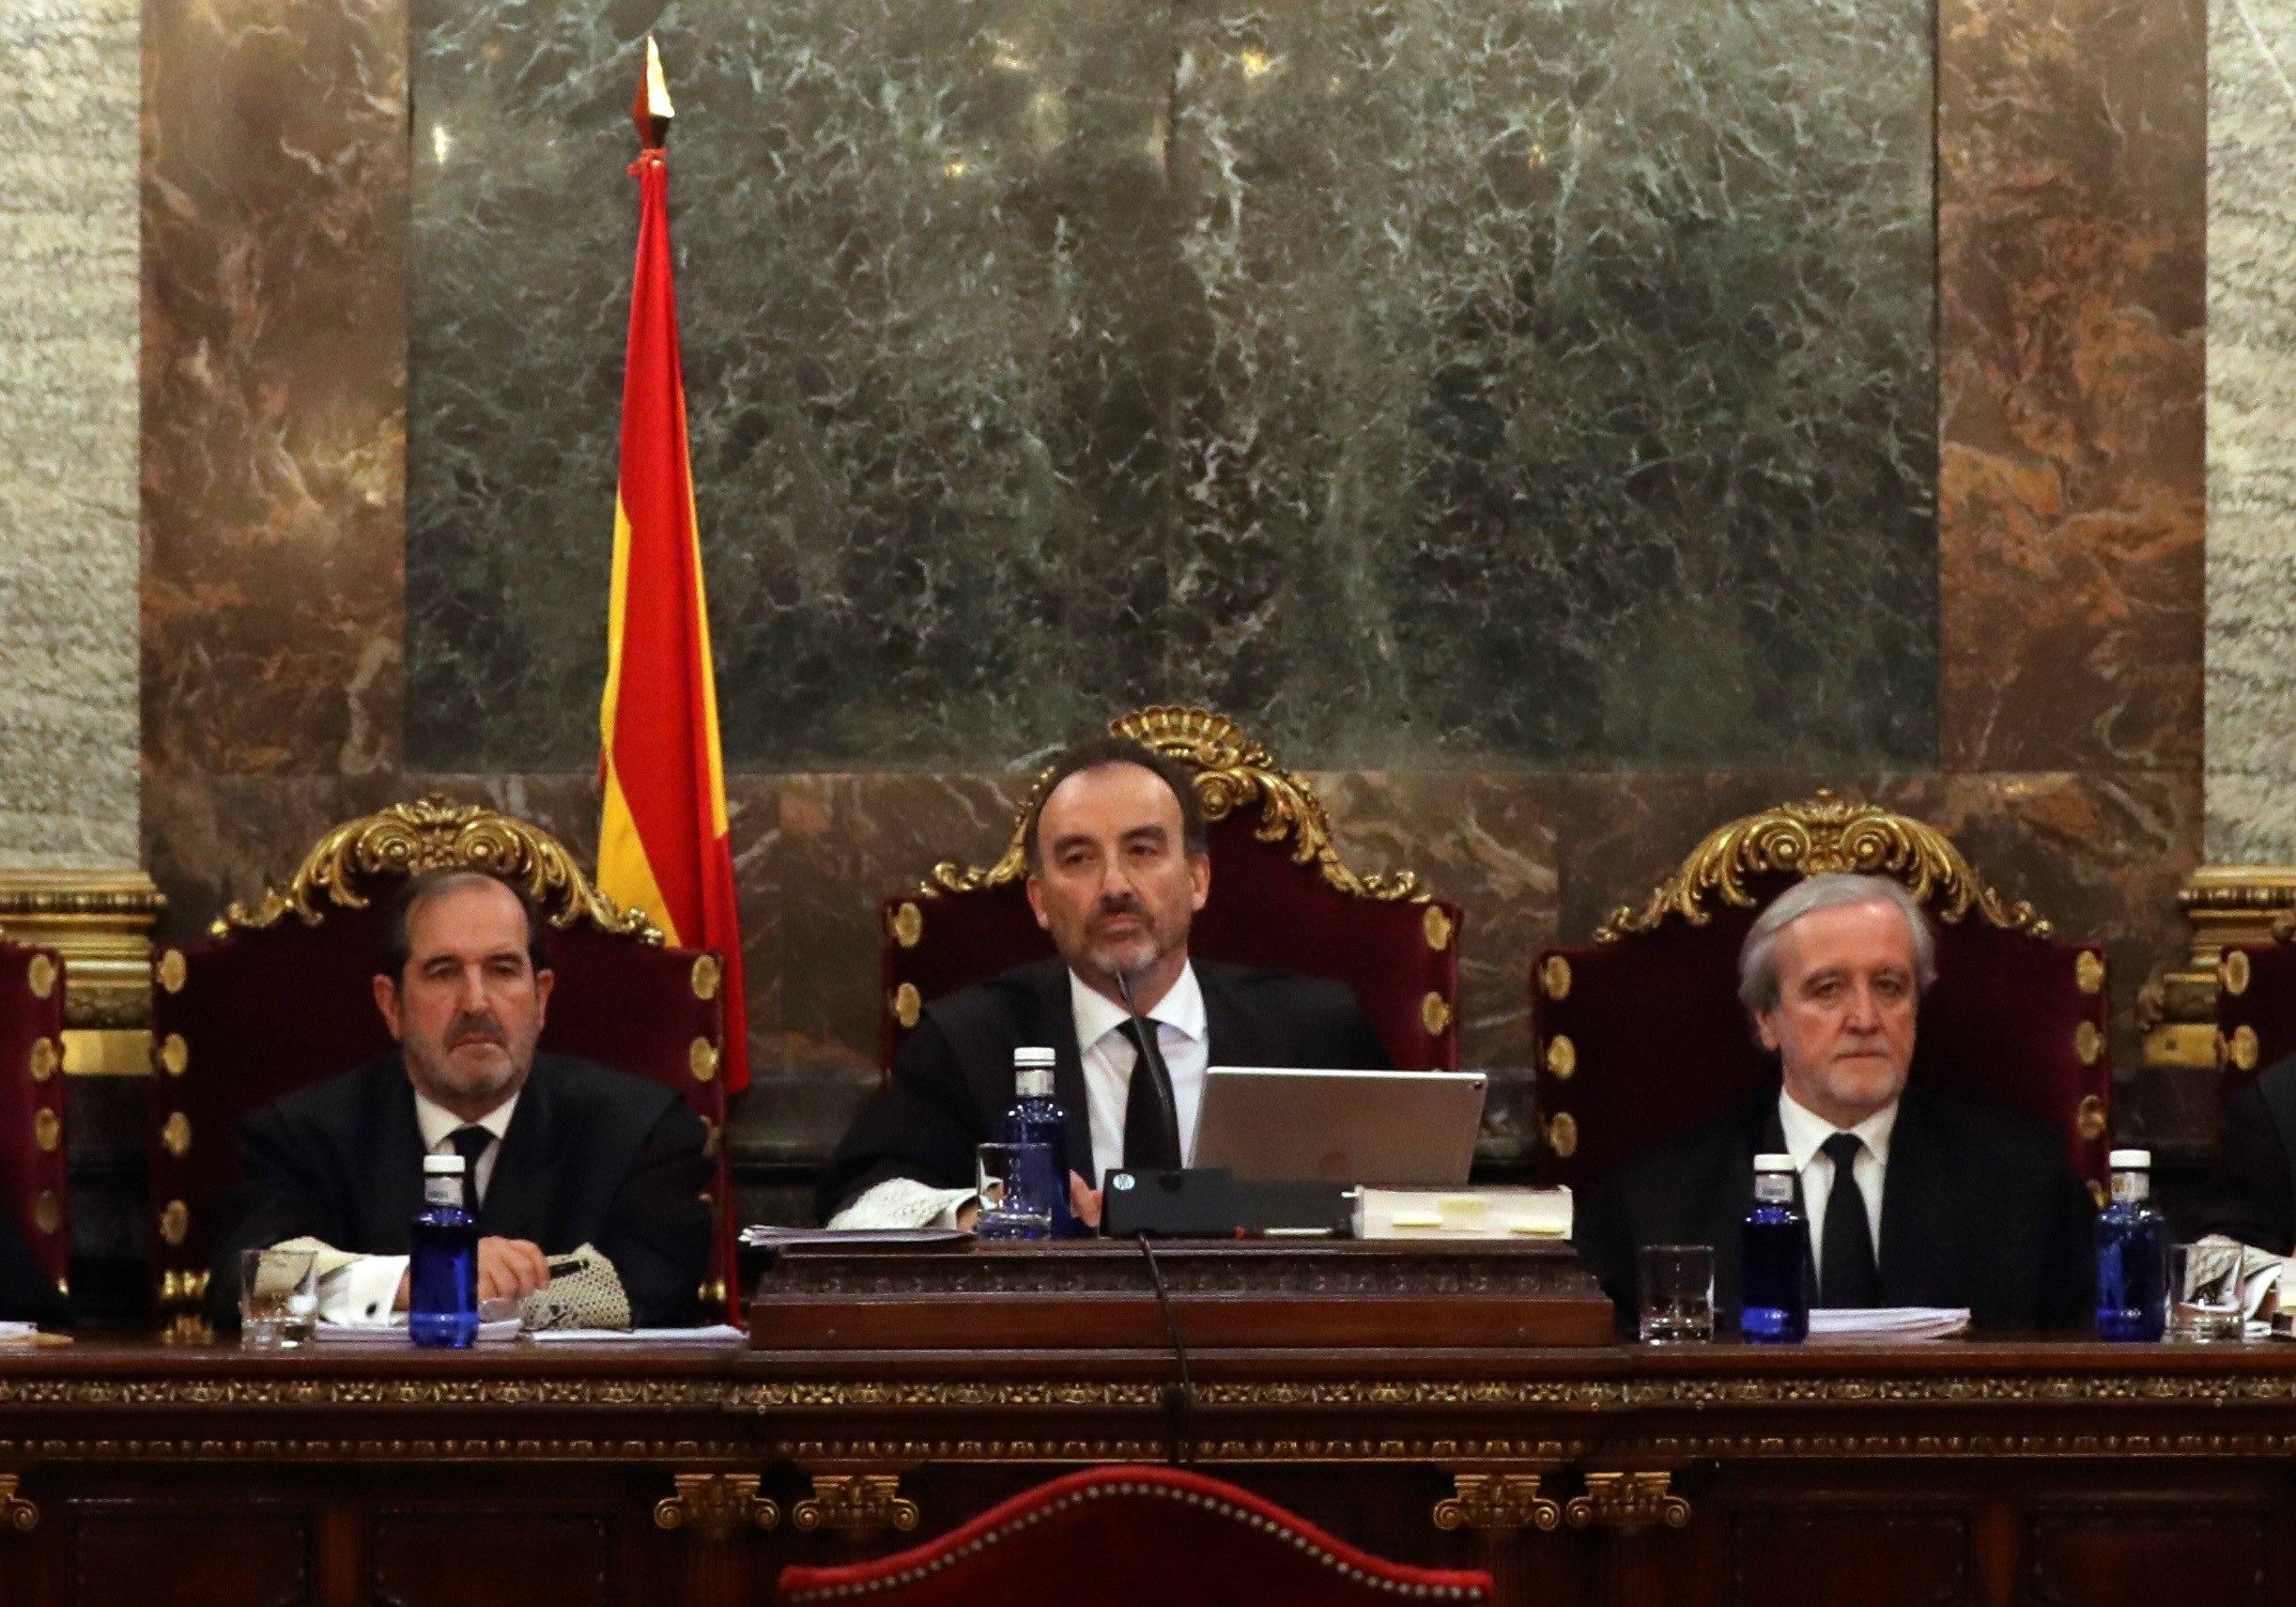 El magistrado Manuel Marchena (c) preside el tribunal, junto a los jueces Andrés Martínez Arreieta (i) y Juan Ramón Berdugo (d) - EP